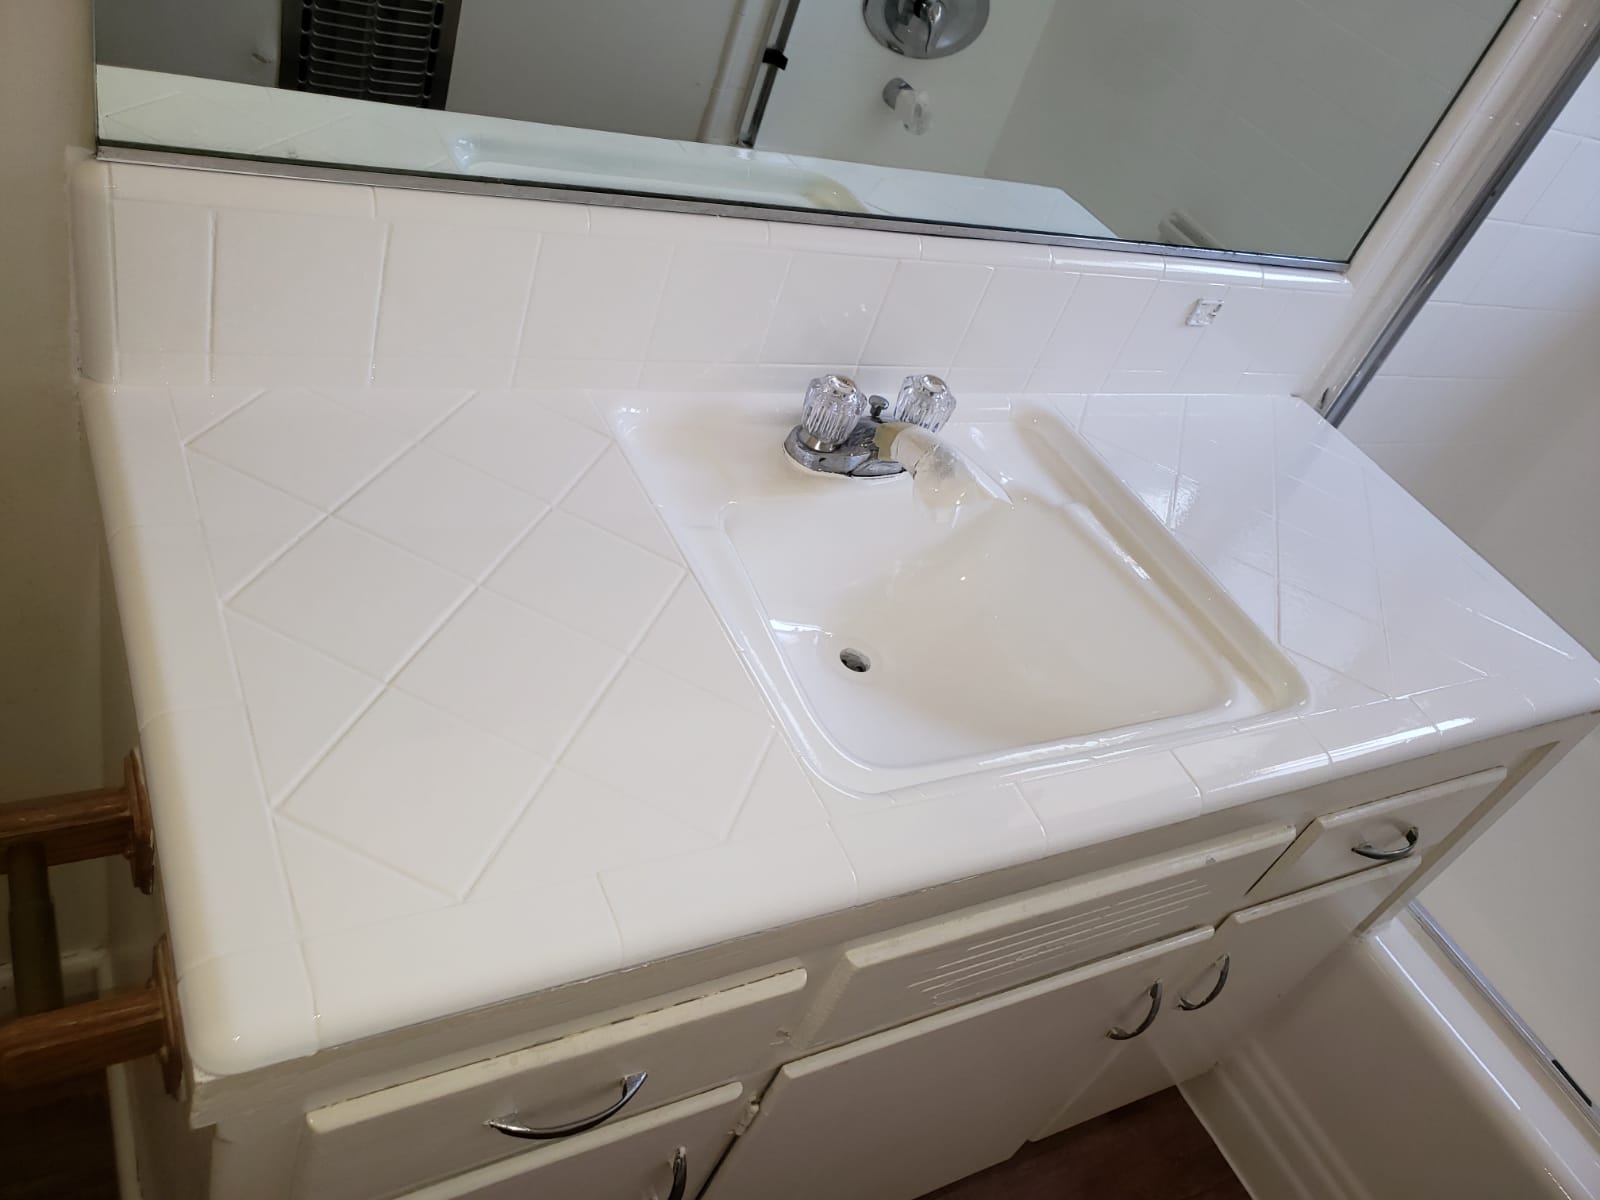 Tile Bathroom Counter After Refinishing | Mission Hills, CA | Julian's Porcelain & Fiberglass Expert